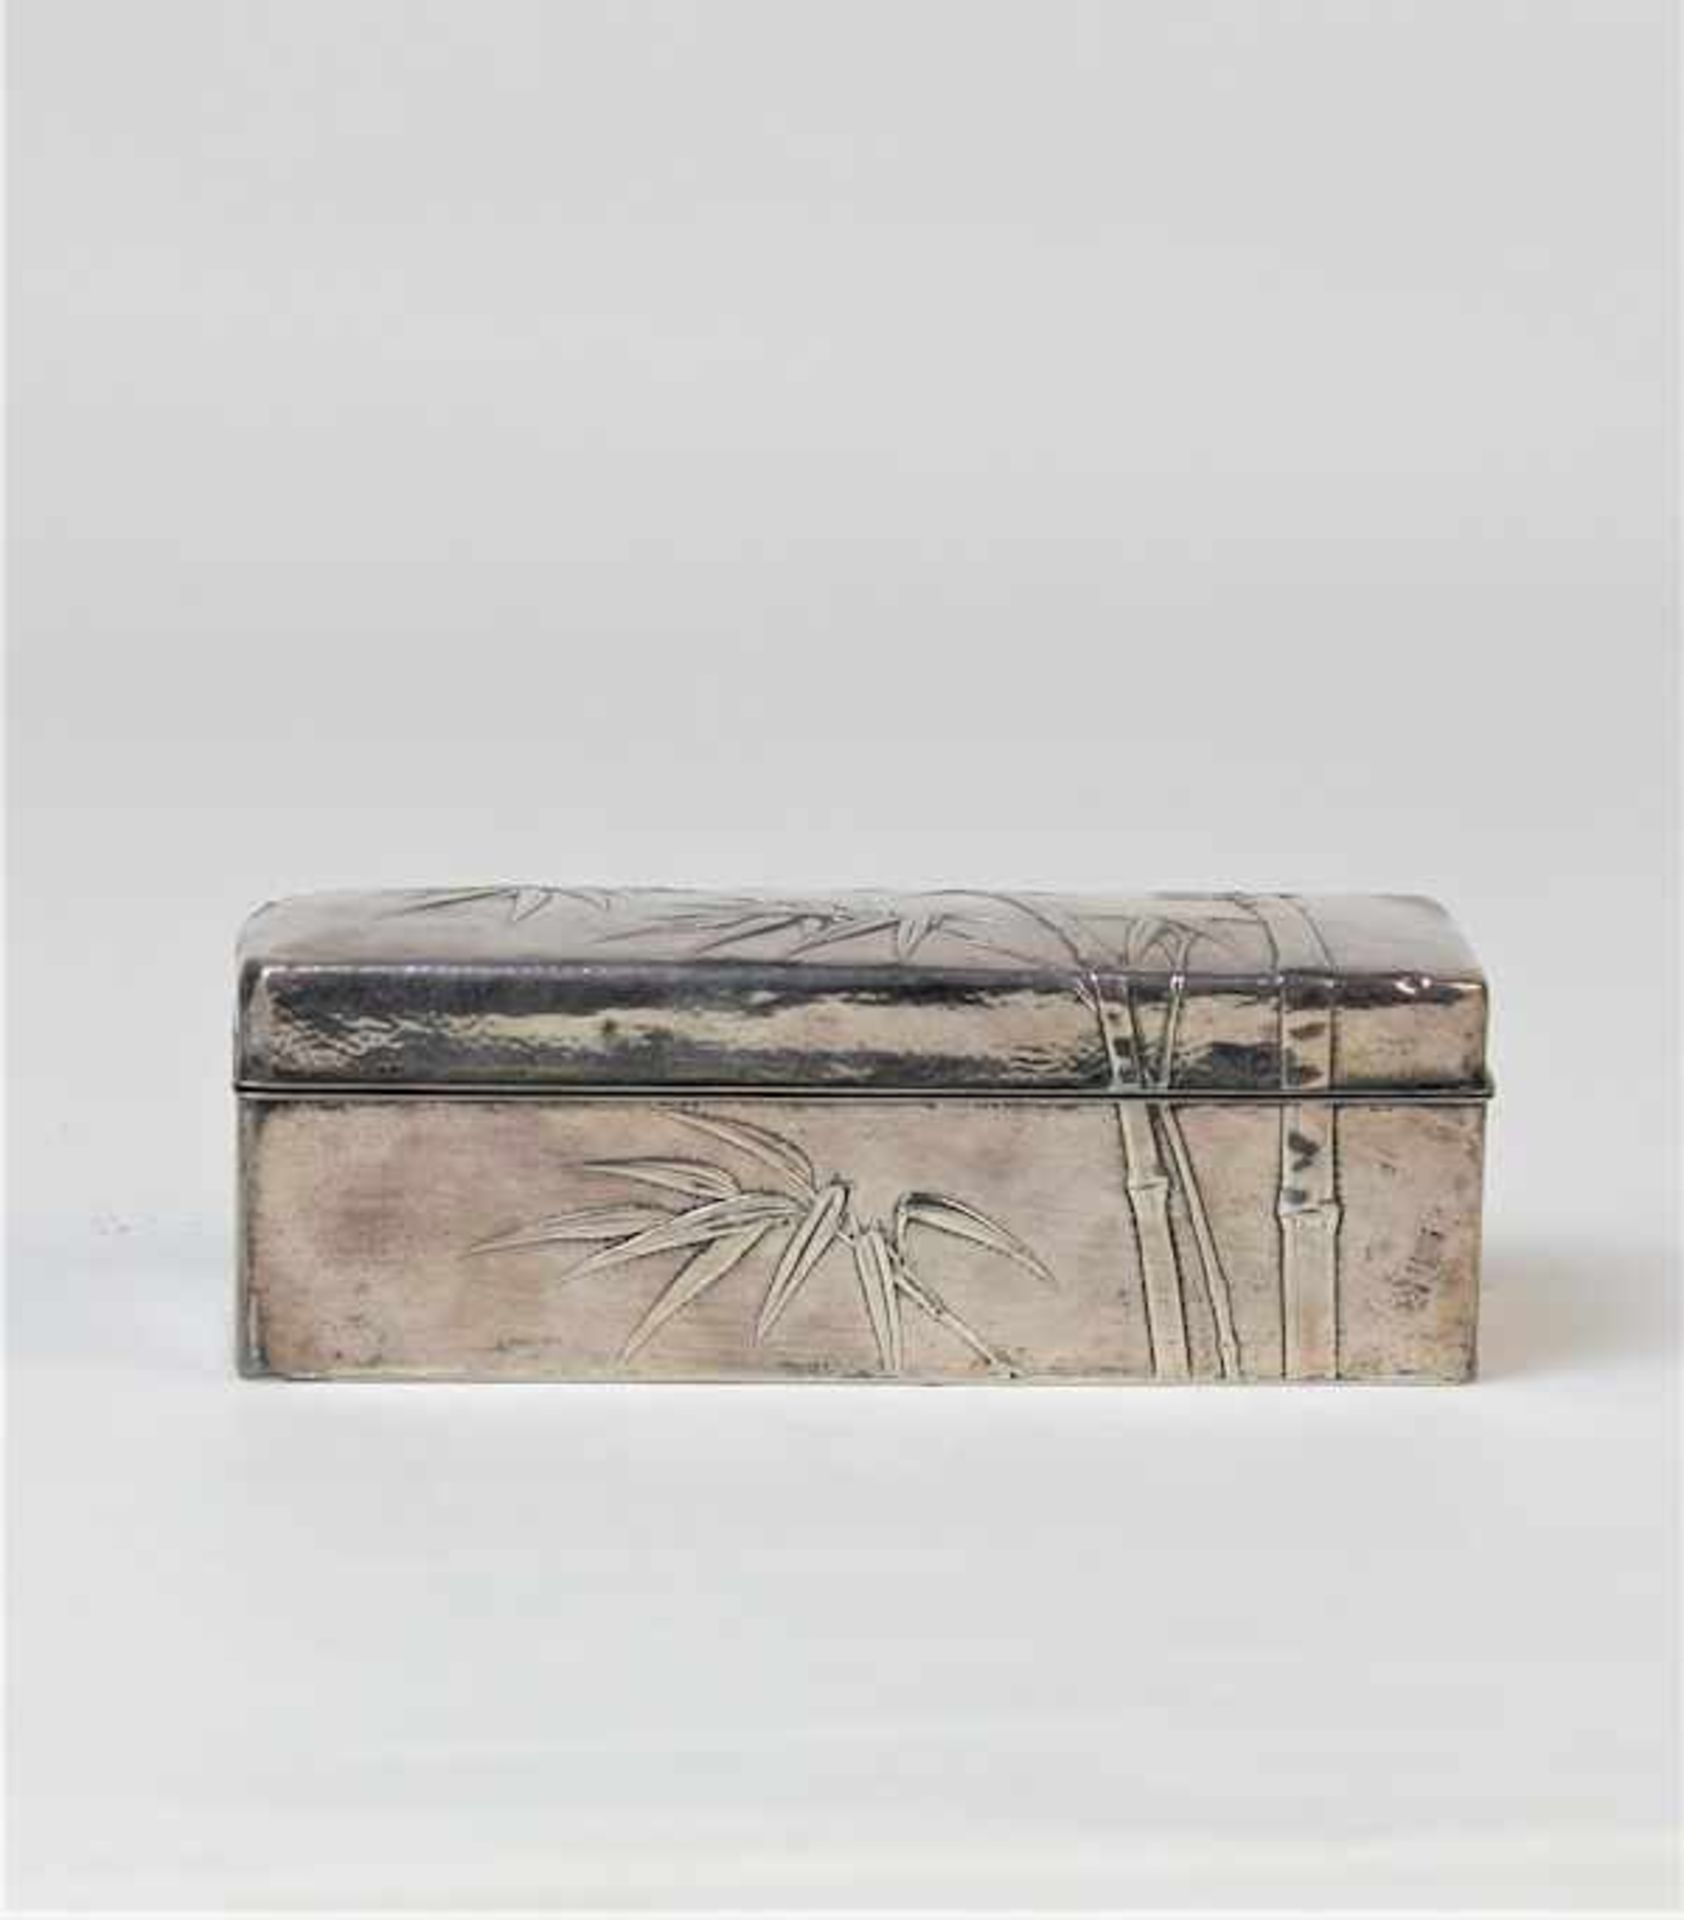 Silberdose " Bambussträucher ", China 19.Jhdt.Holz mit aufgelegtem Silber, getrieben Maße: ca. 12,